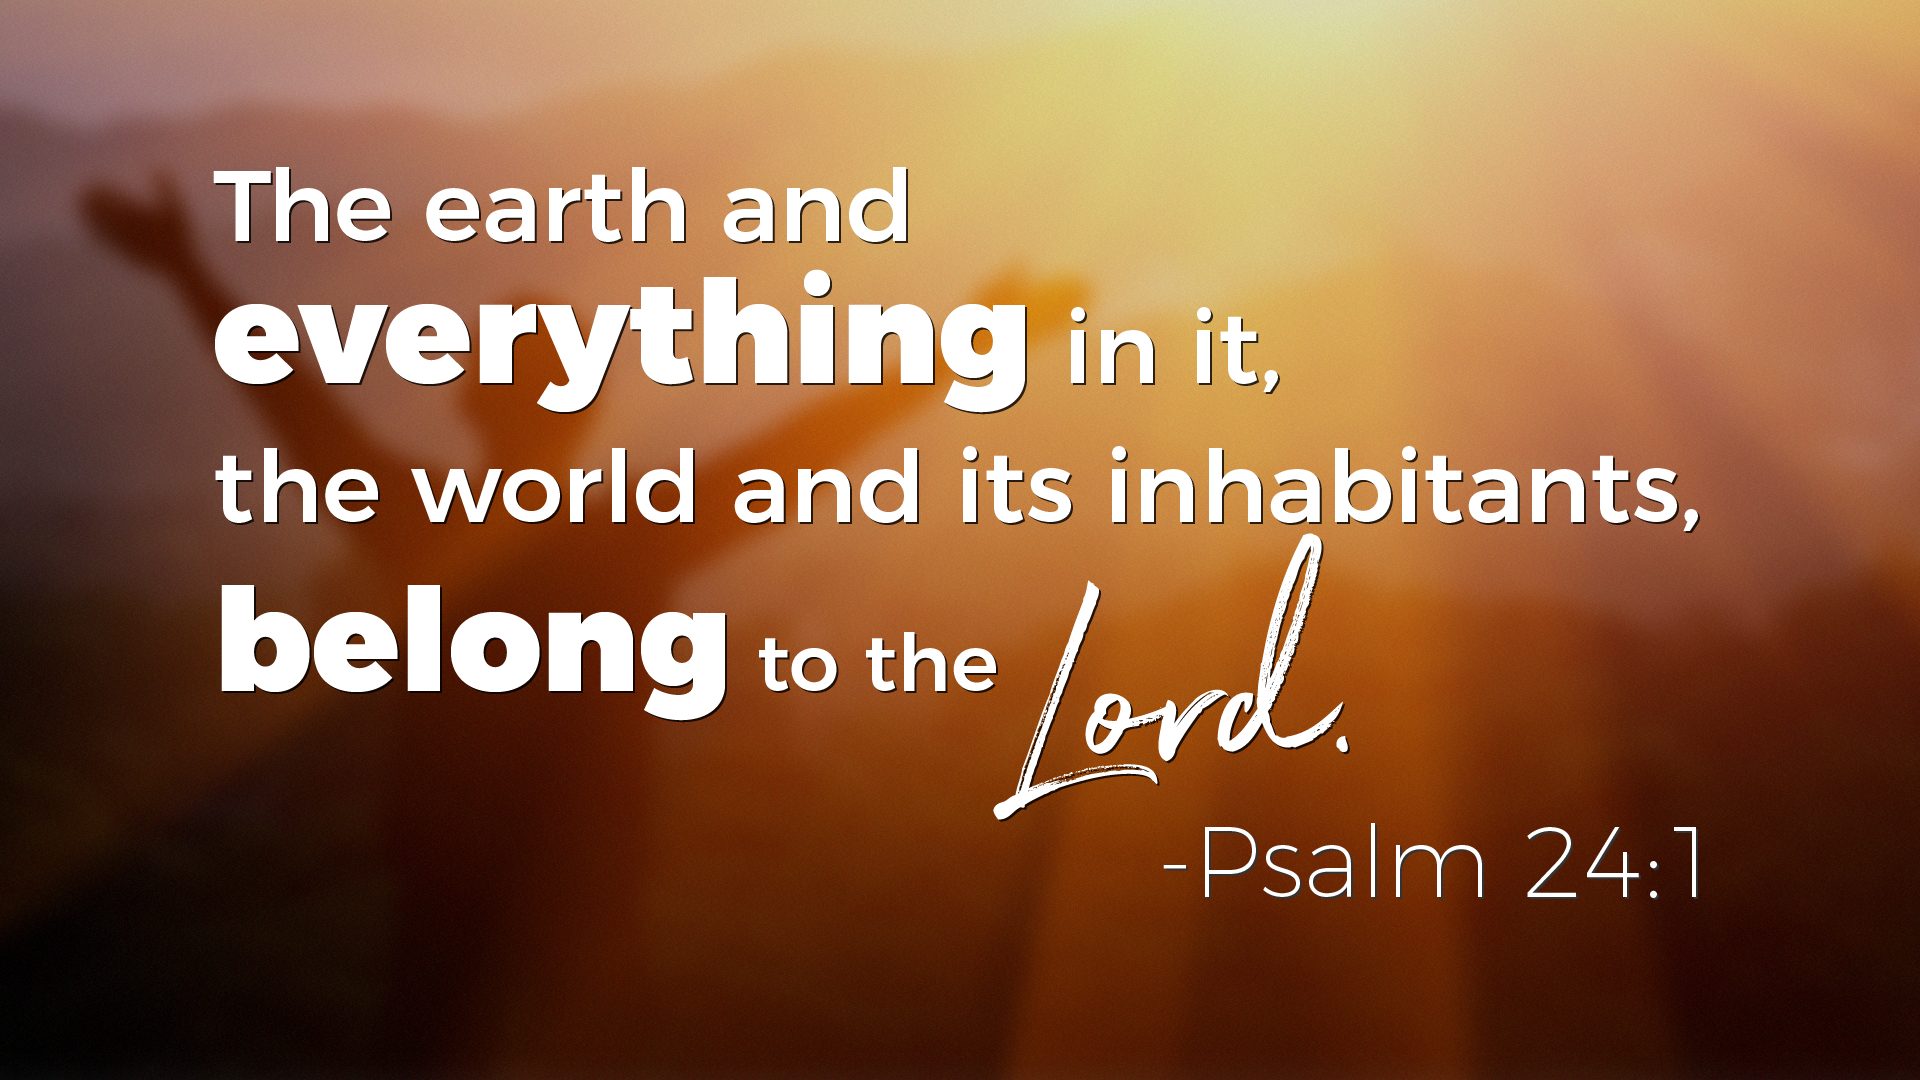 Psalms on Wealth - Psalm 24:1